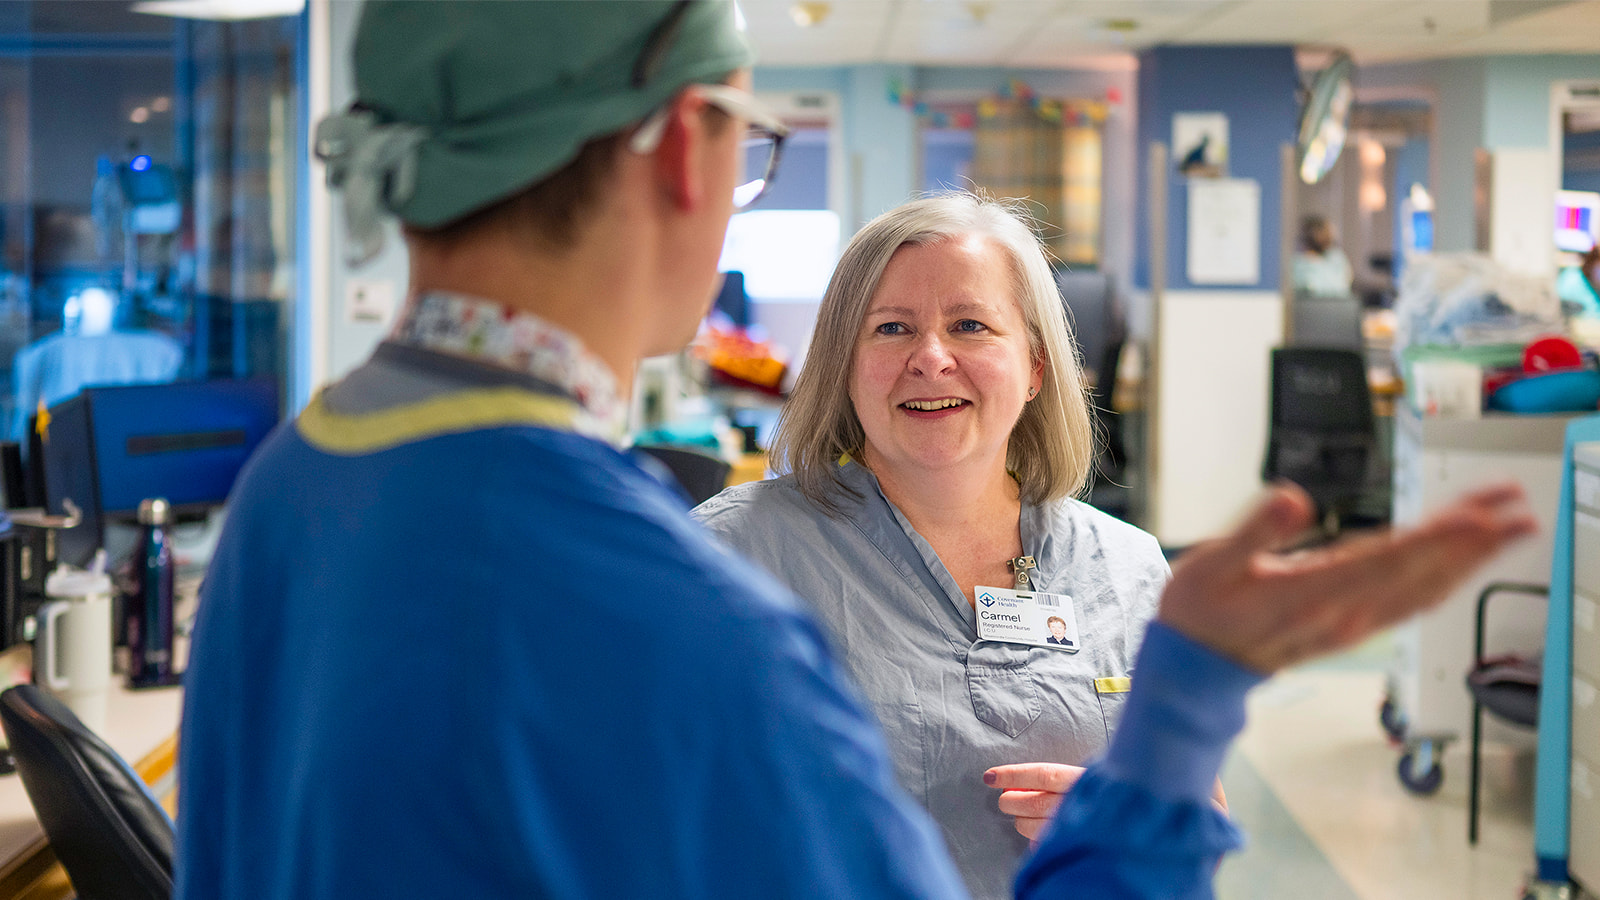 University of Alberta nurses are leading the way towards better patient care, through advocacy, innovation and education. (Photo: John Ulan)